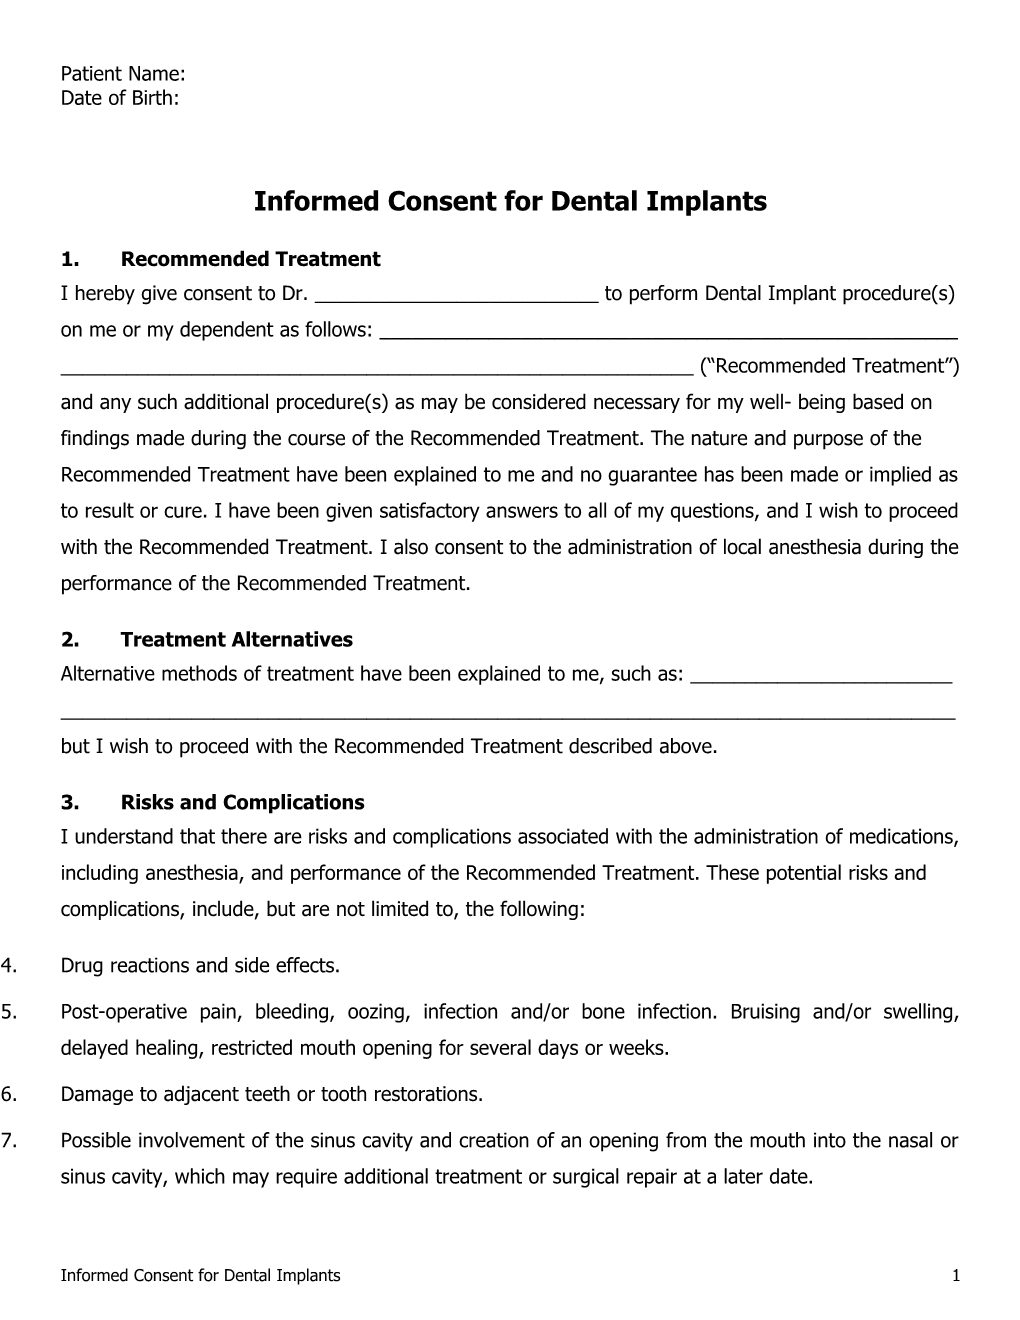 Informed Consent for Dental Implants